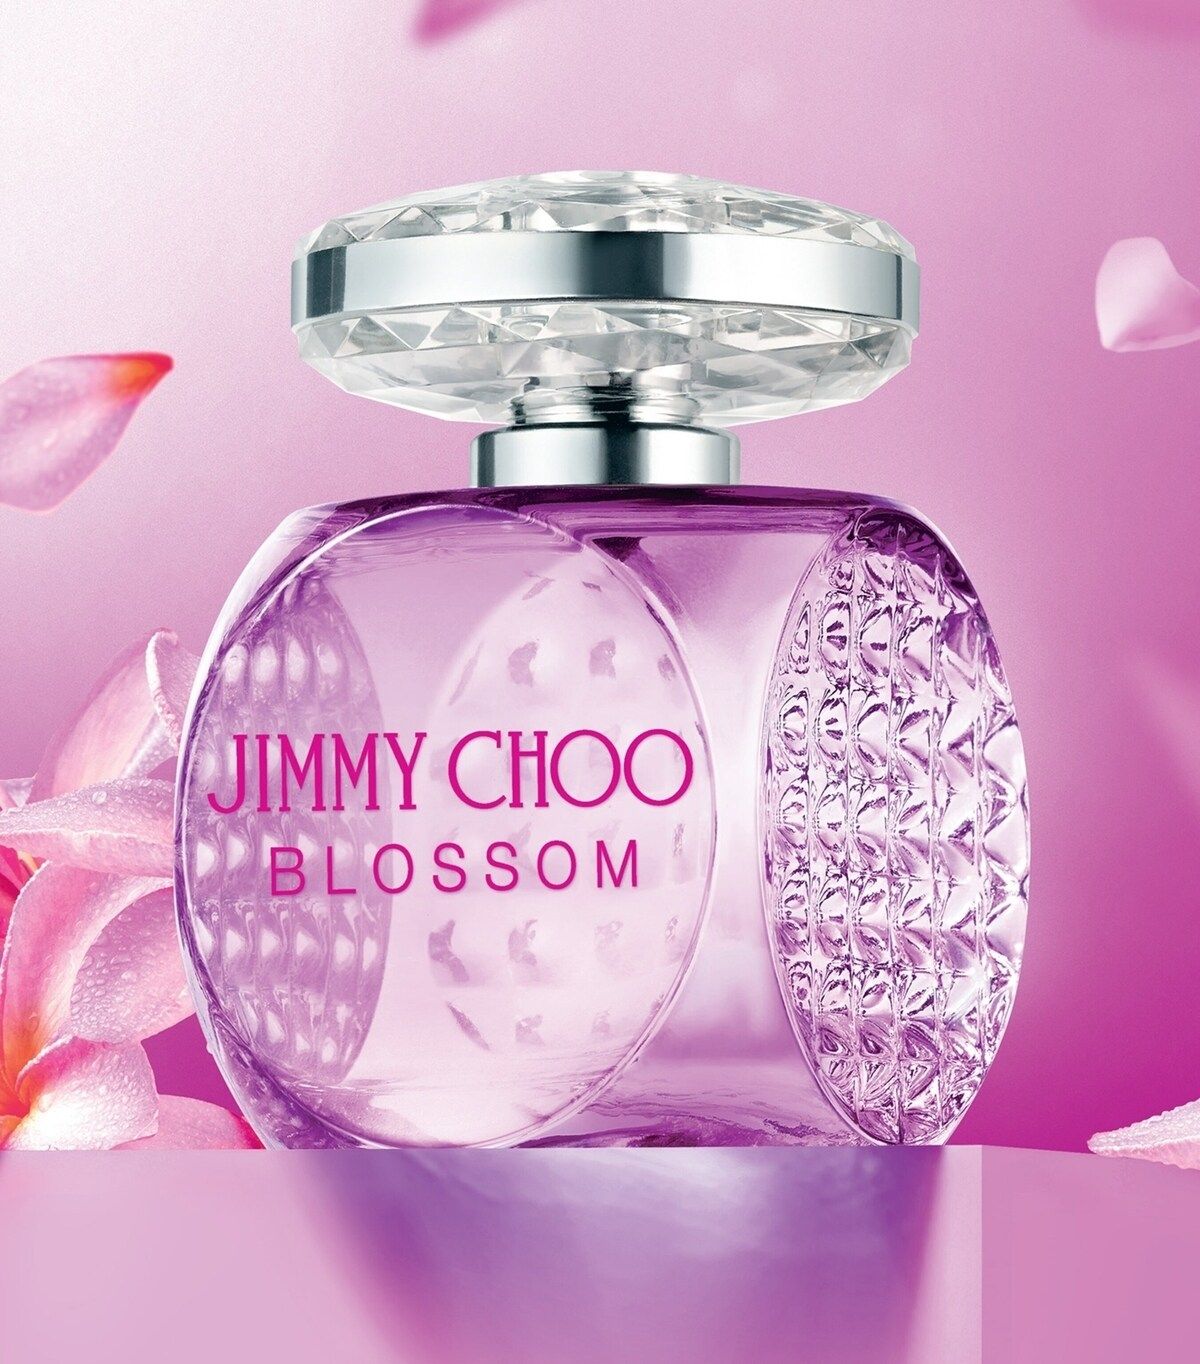 Jimmy Choo Blossom Special Edition 2023 Jimmy Choo parfum un nouveau